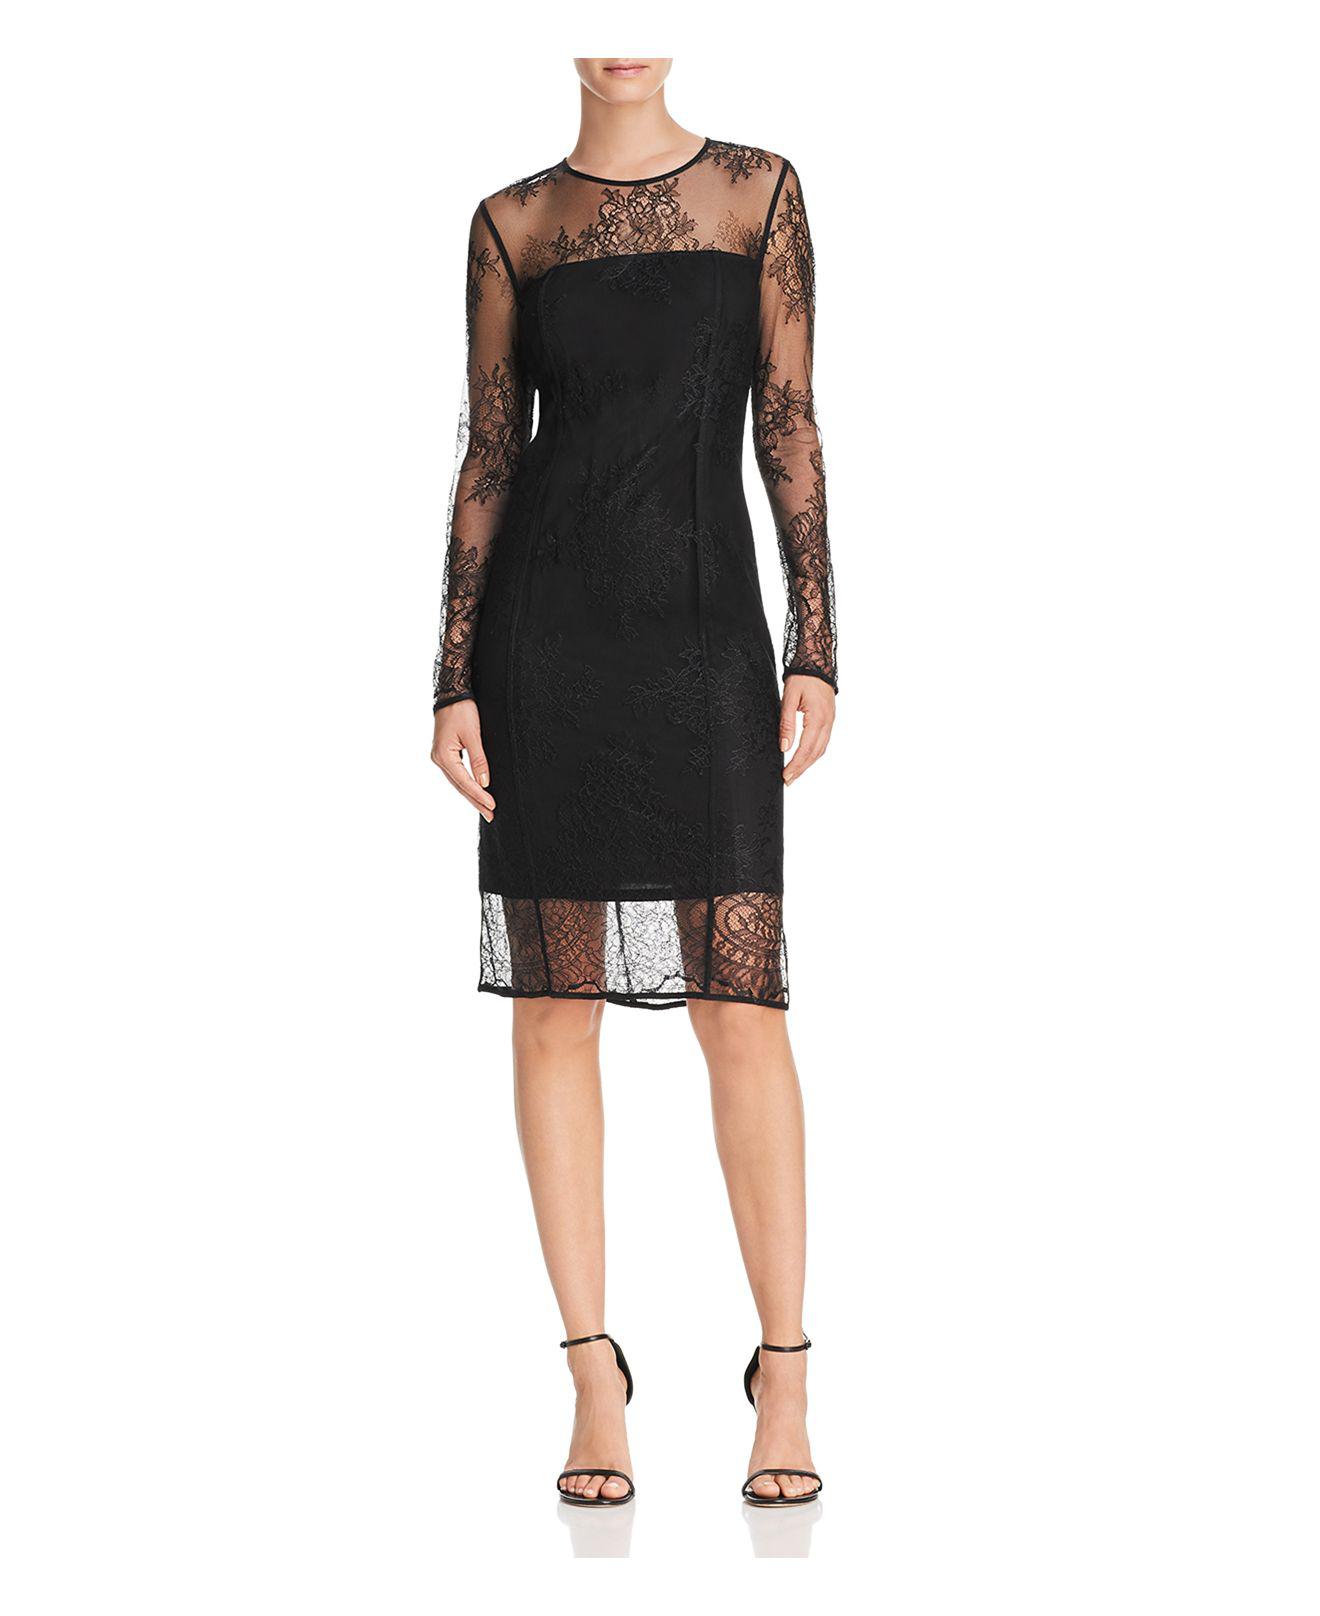 Lyst - Donna Karan Lace Sheath Dress in Black